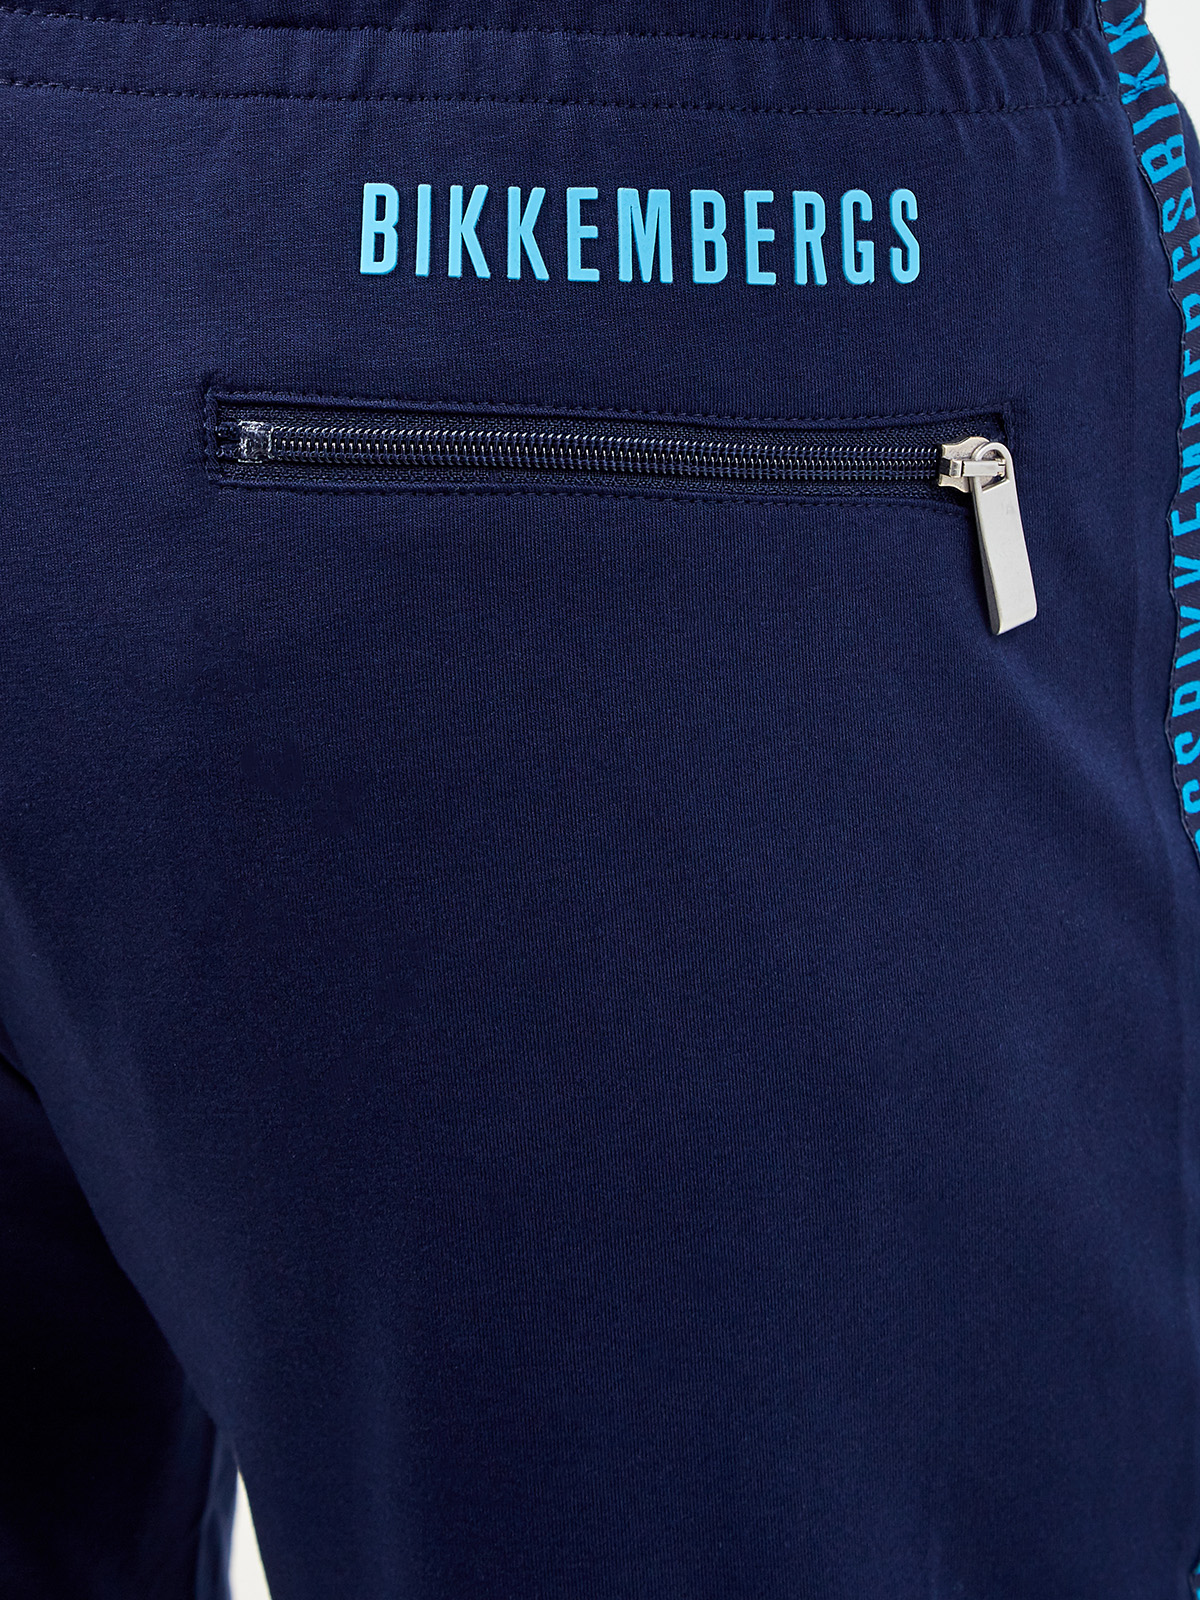 Брюки в спортивном стиле с контрастным логотипом BIKKEMBERGS, цвет синий, размер M;L;XL;2XL;3XL - фото 6